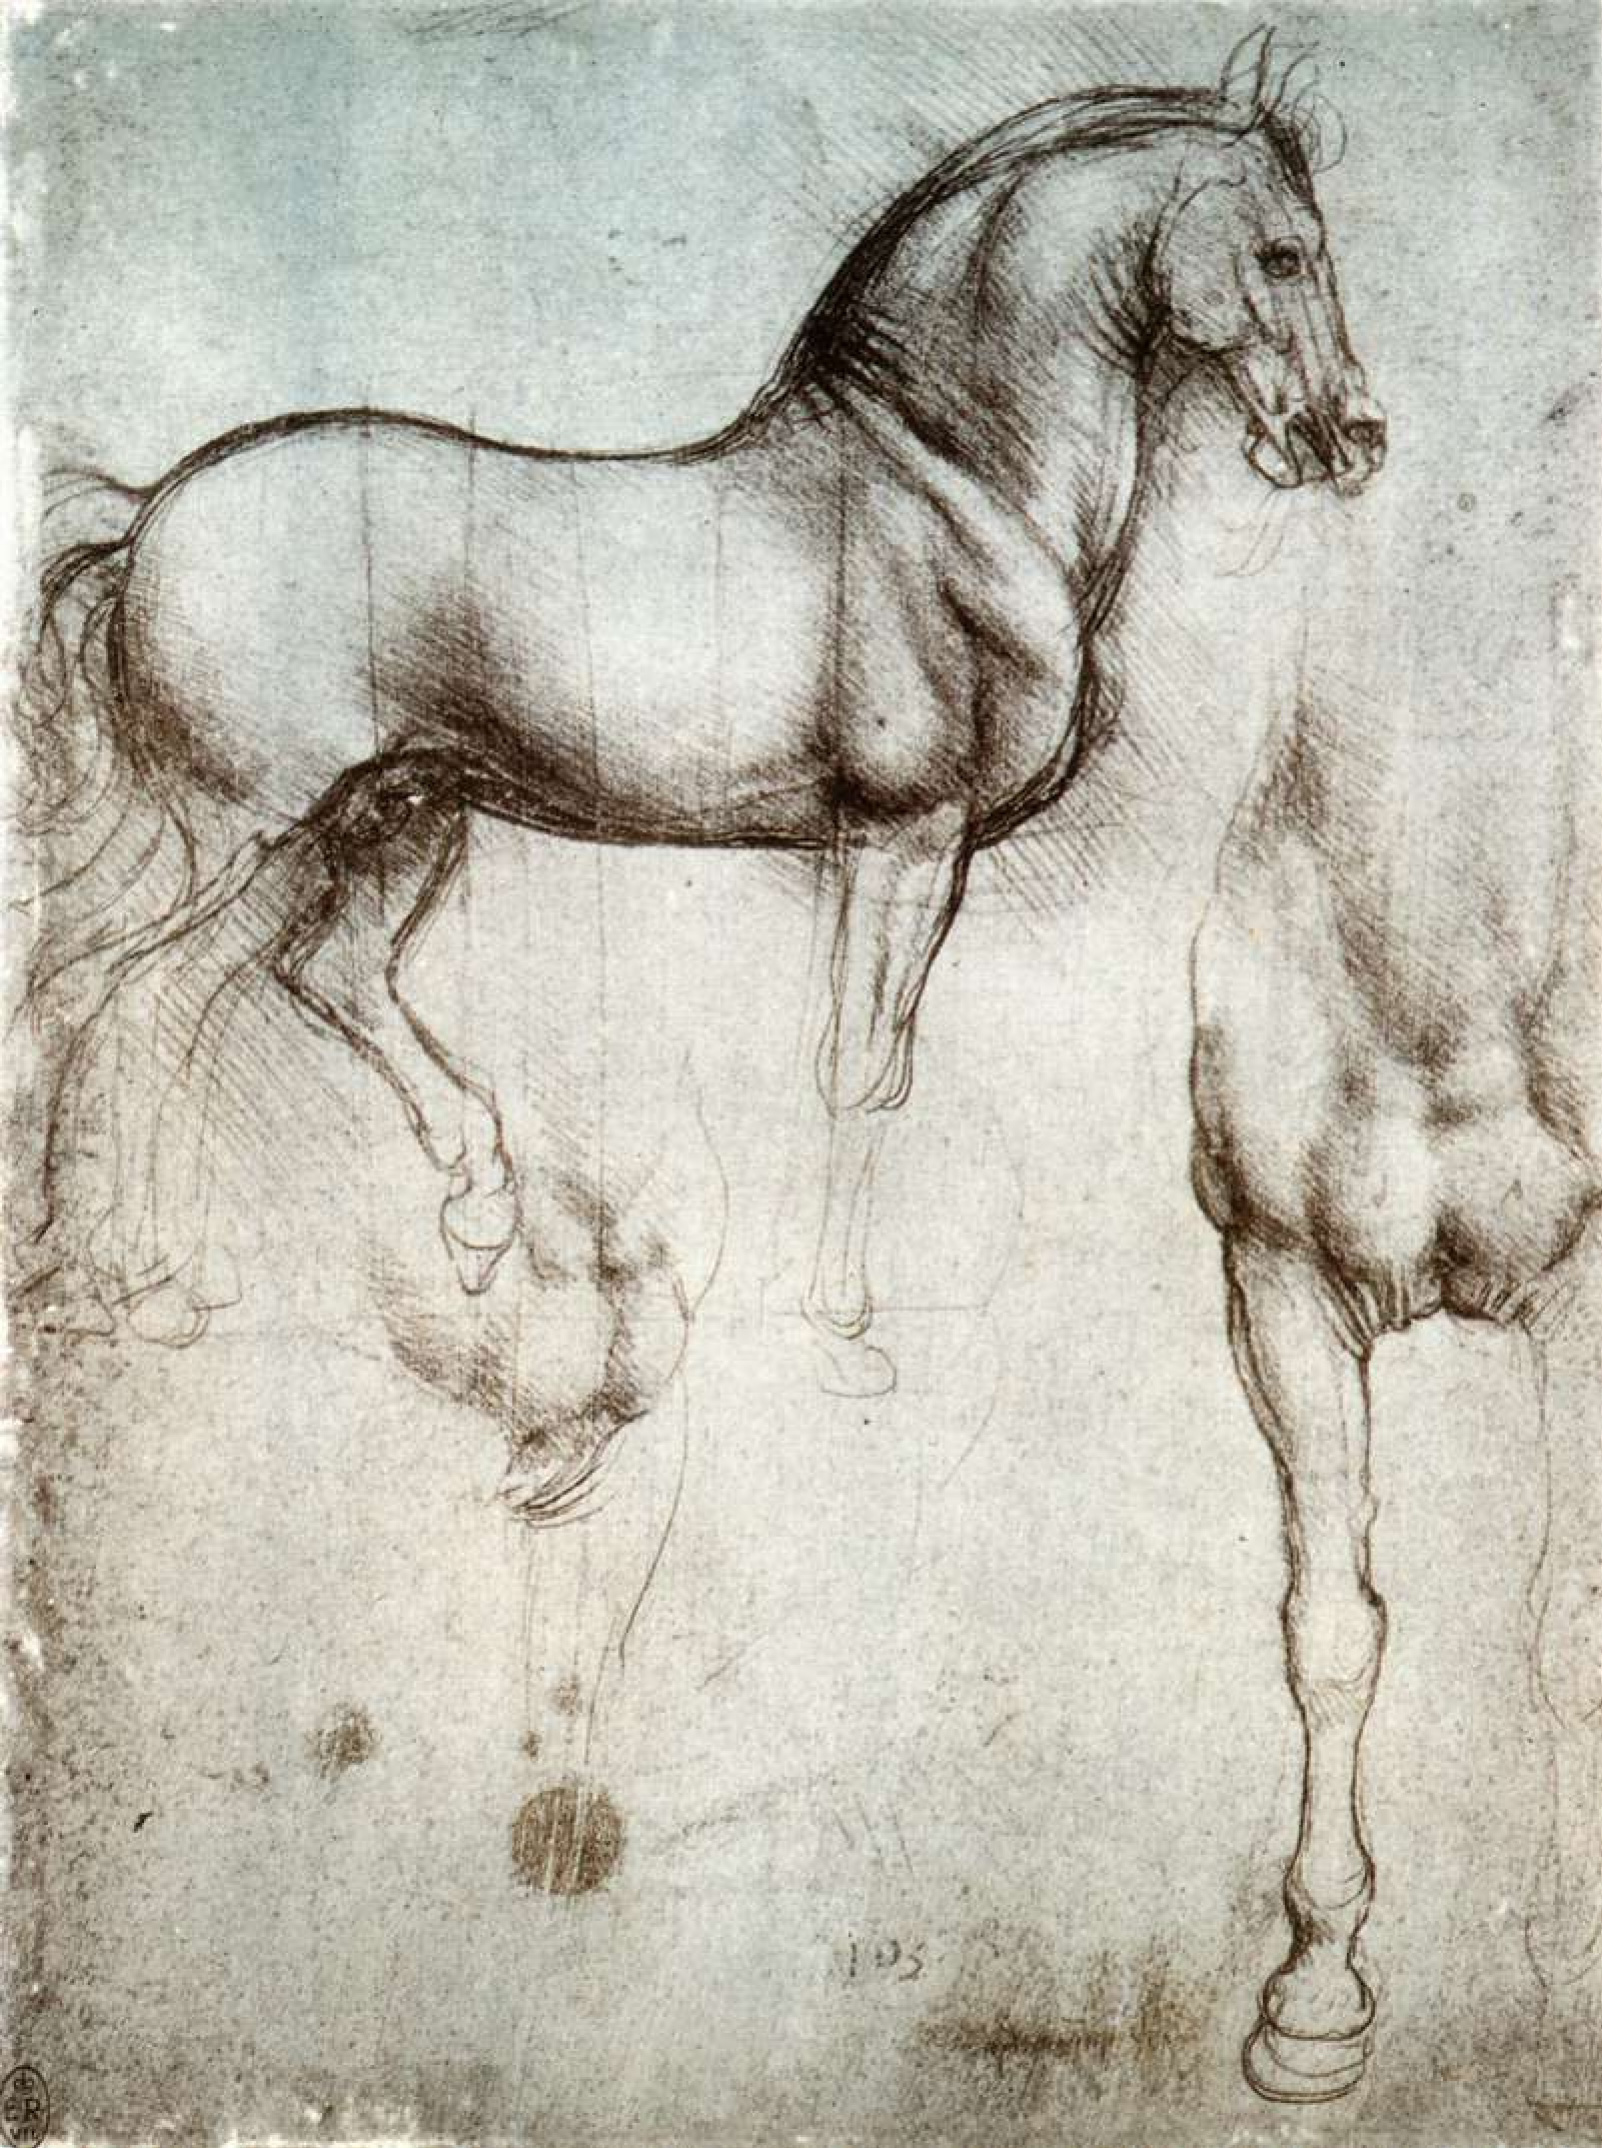 Leonardos anatomical sketches fascinate modernday anatomist